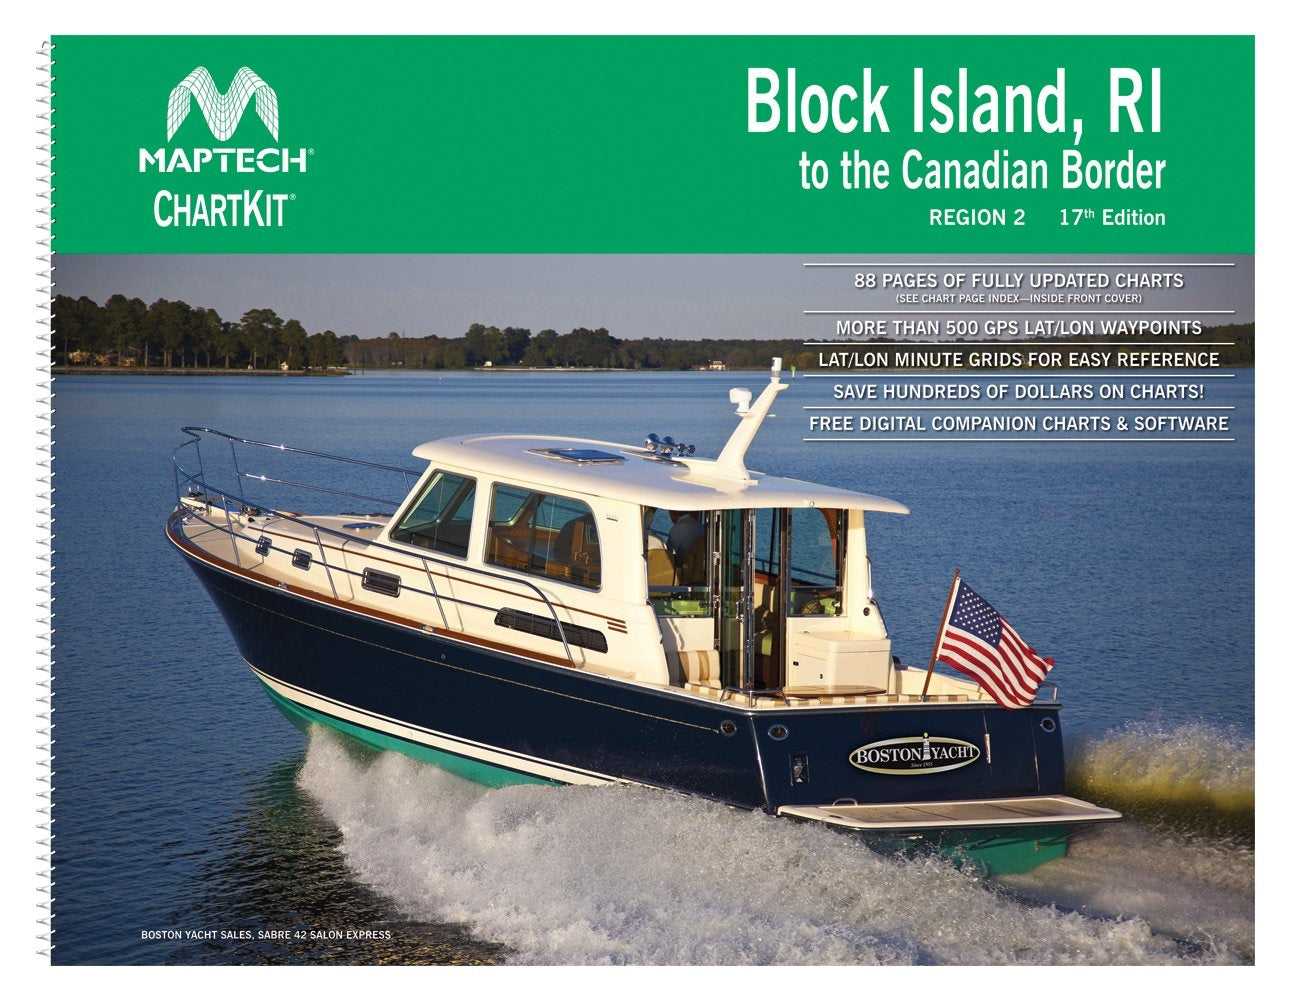 Block Island, RI to the Canadian Border Region 2, 17th Edition Richardson's Maptech Chartkit